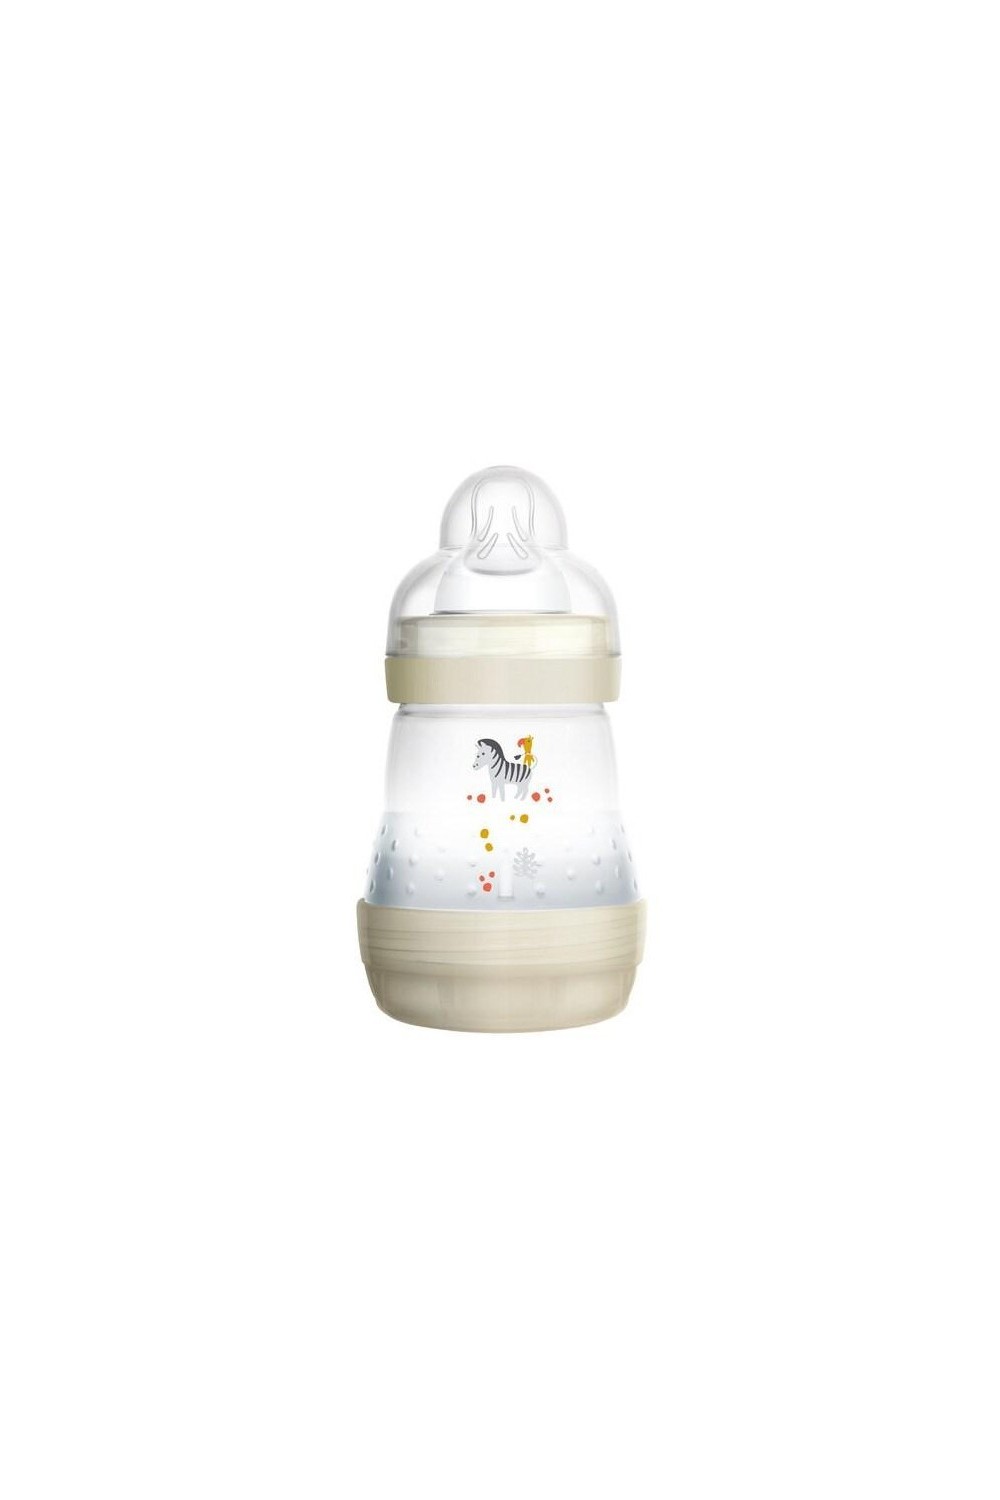 Mam Baby Anti Colic Bottle Unisex 160ml